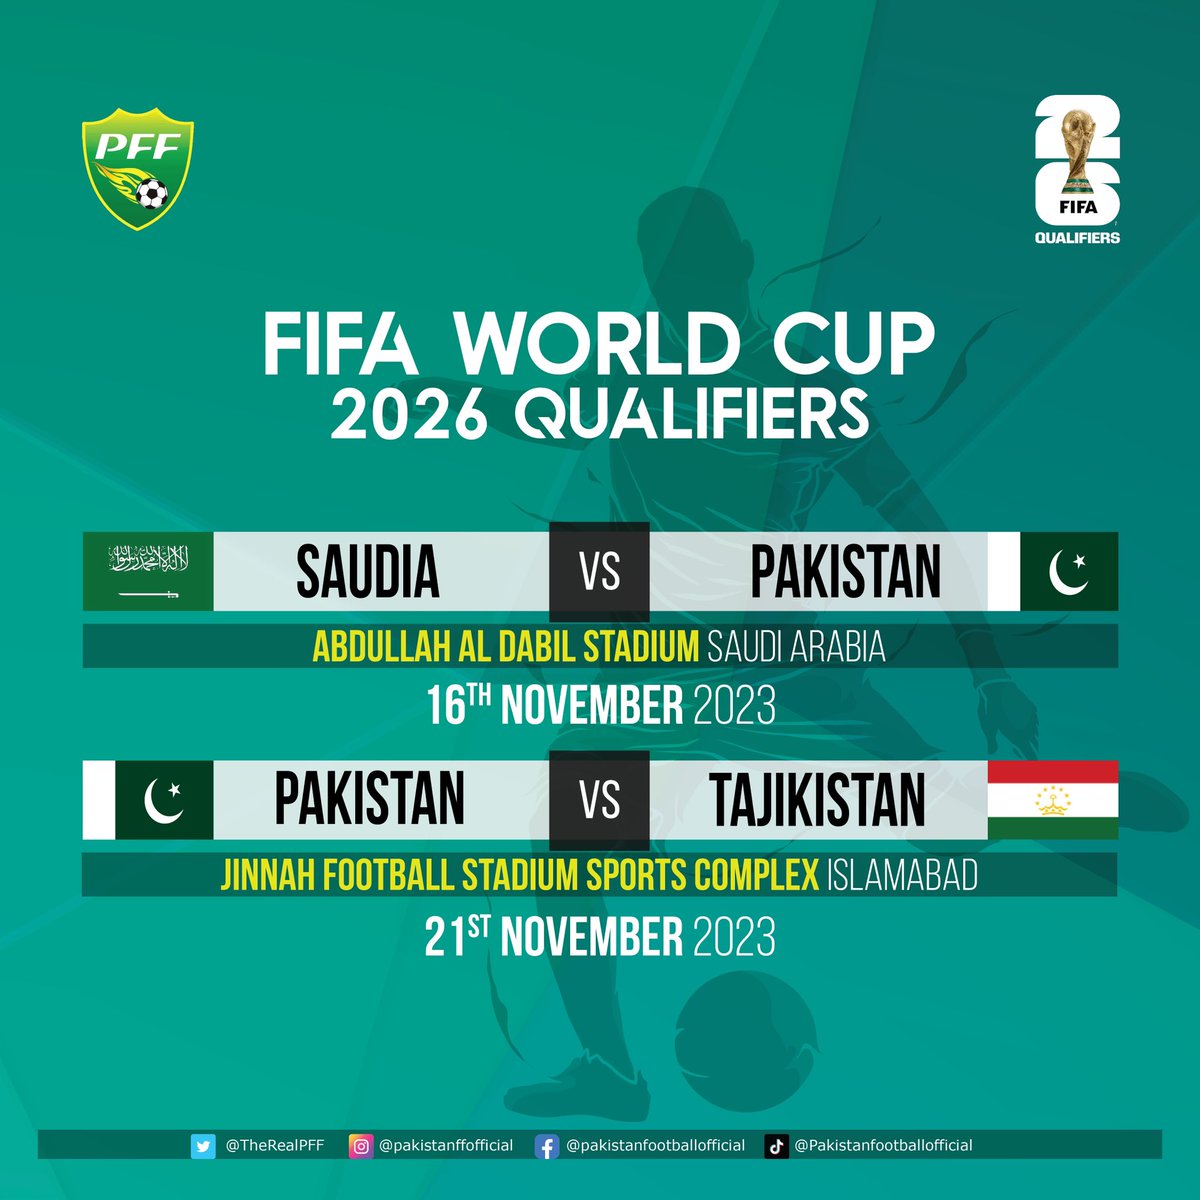 Pakistan FIFA World Cup qualifiers fixtures 
#forgingfootballforwards 
#wearepakistanfootball #dilsayfootball #Shaheens #FIFAWorldCup #FIFA #Pak